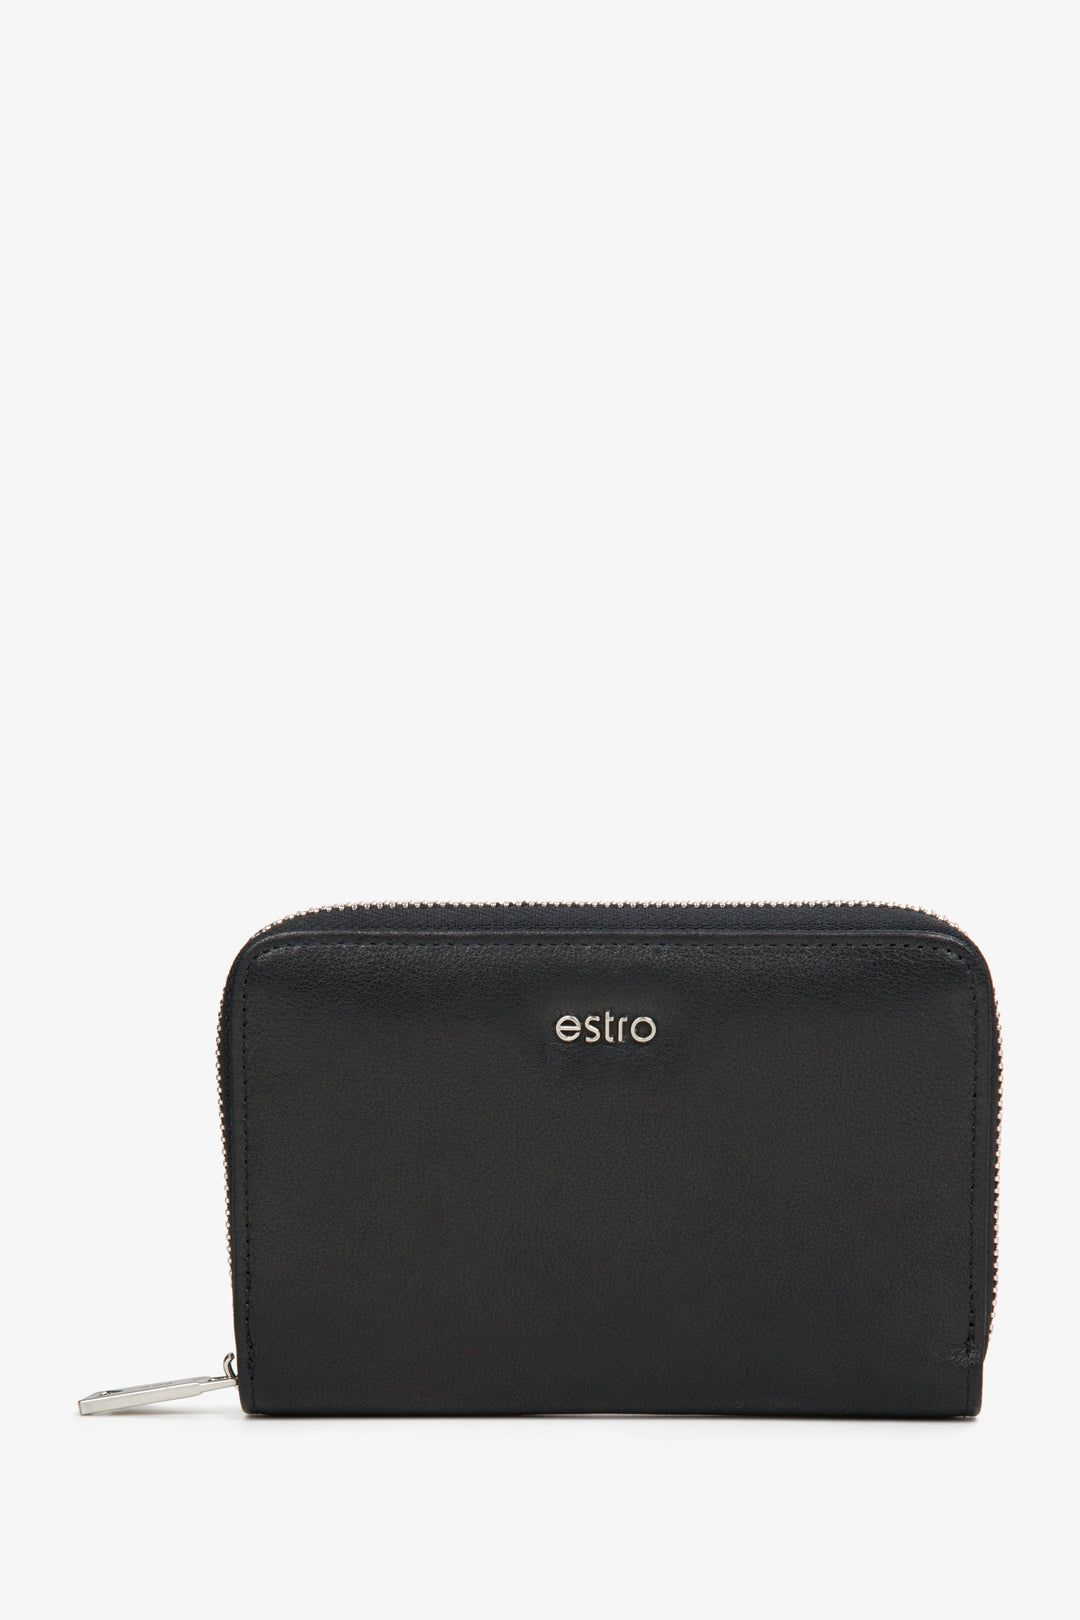 Men's Black Zipper Wallet made of Genuine Leather Estro ER00114463.